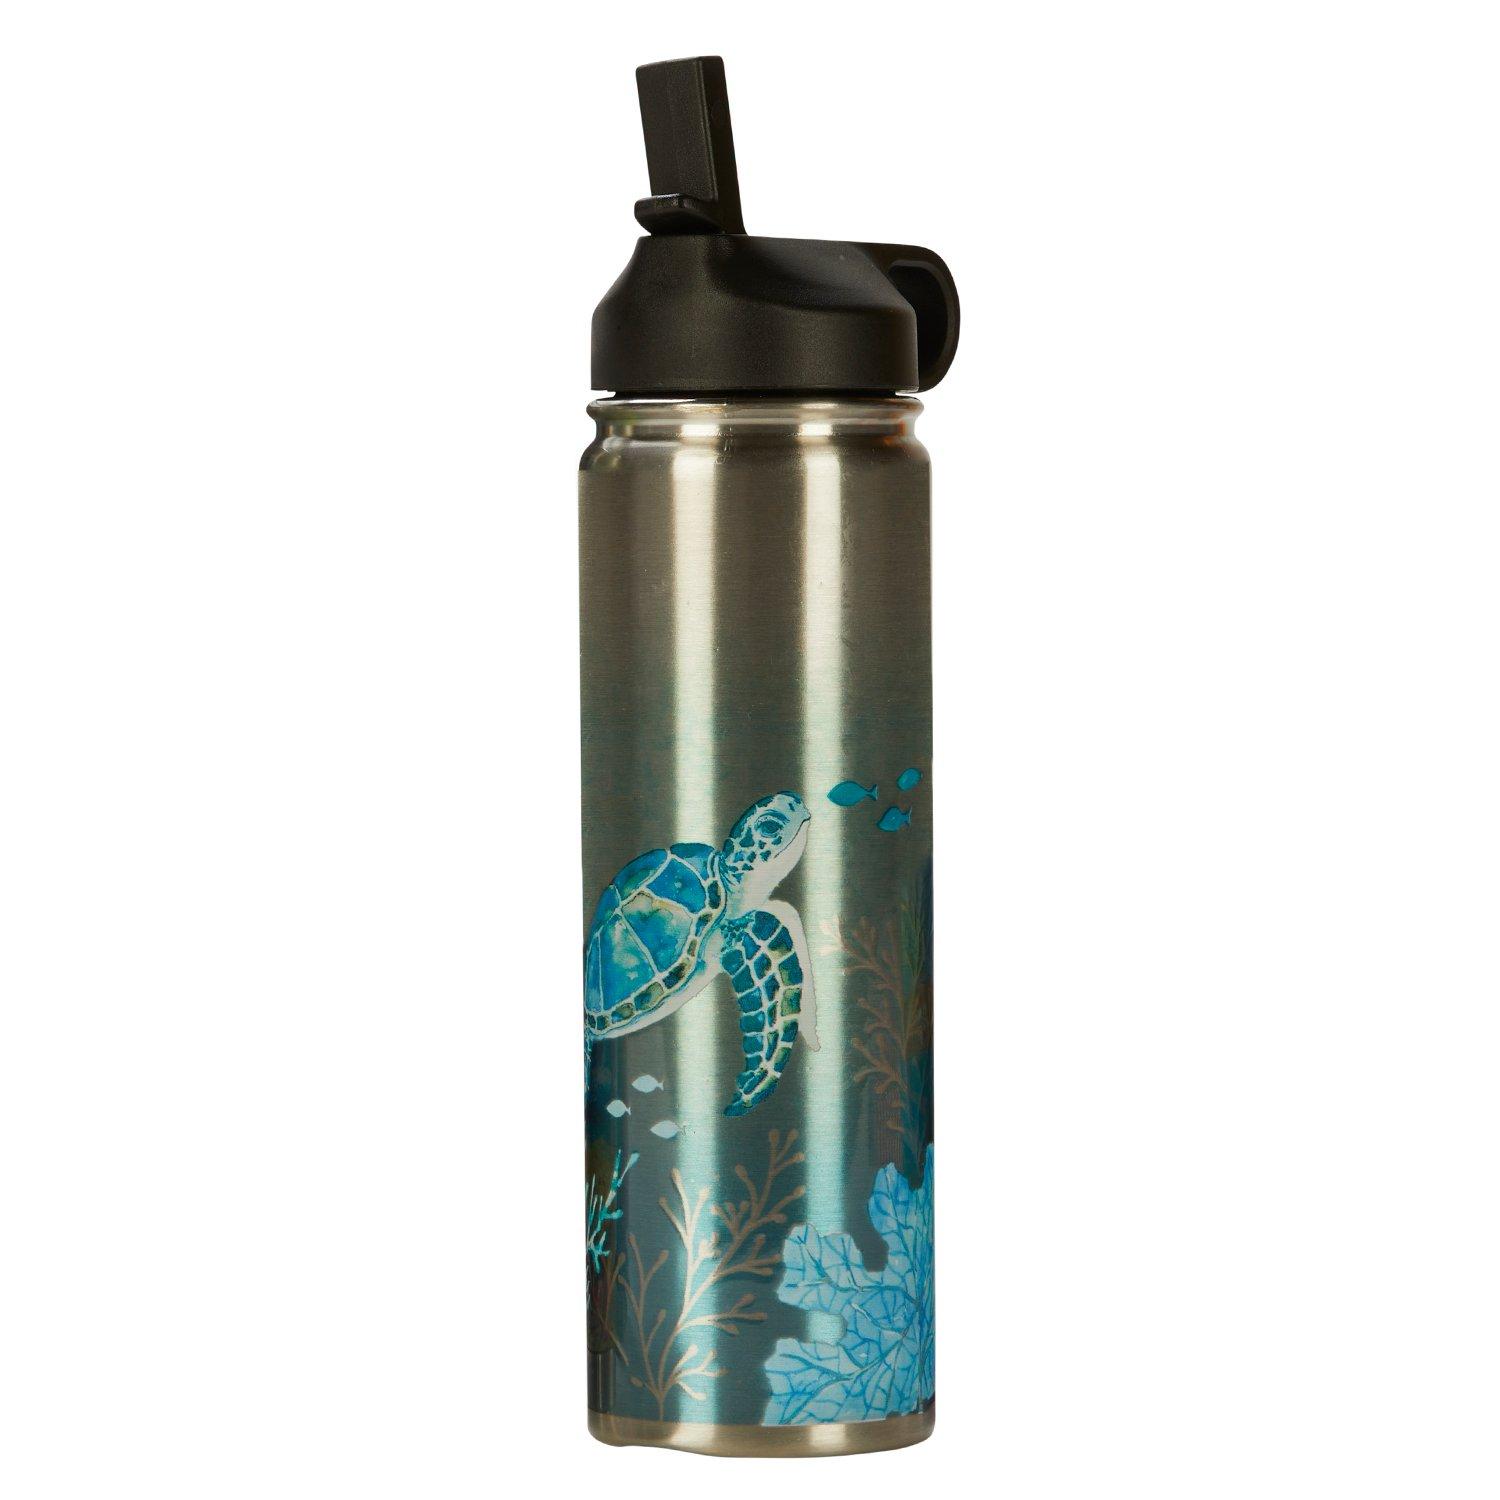 Owala Freesip 24Oz Stainless Steel Water Bottle - Shark/Blue